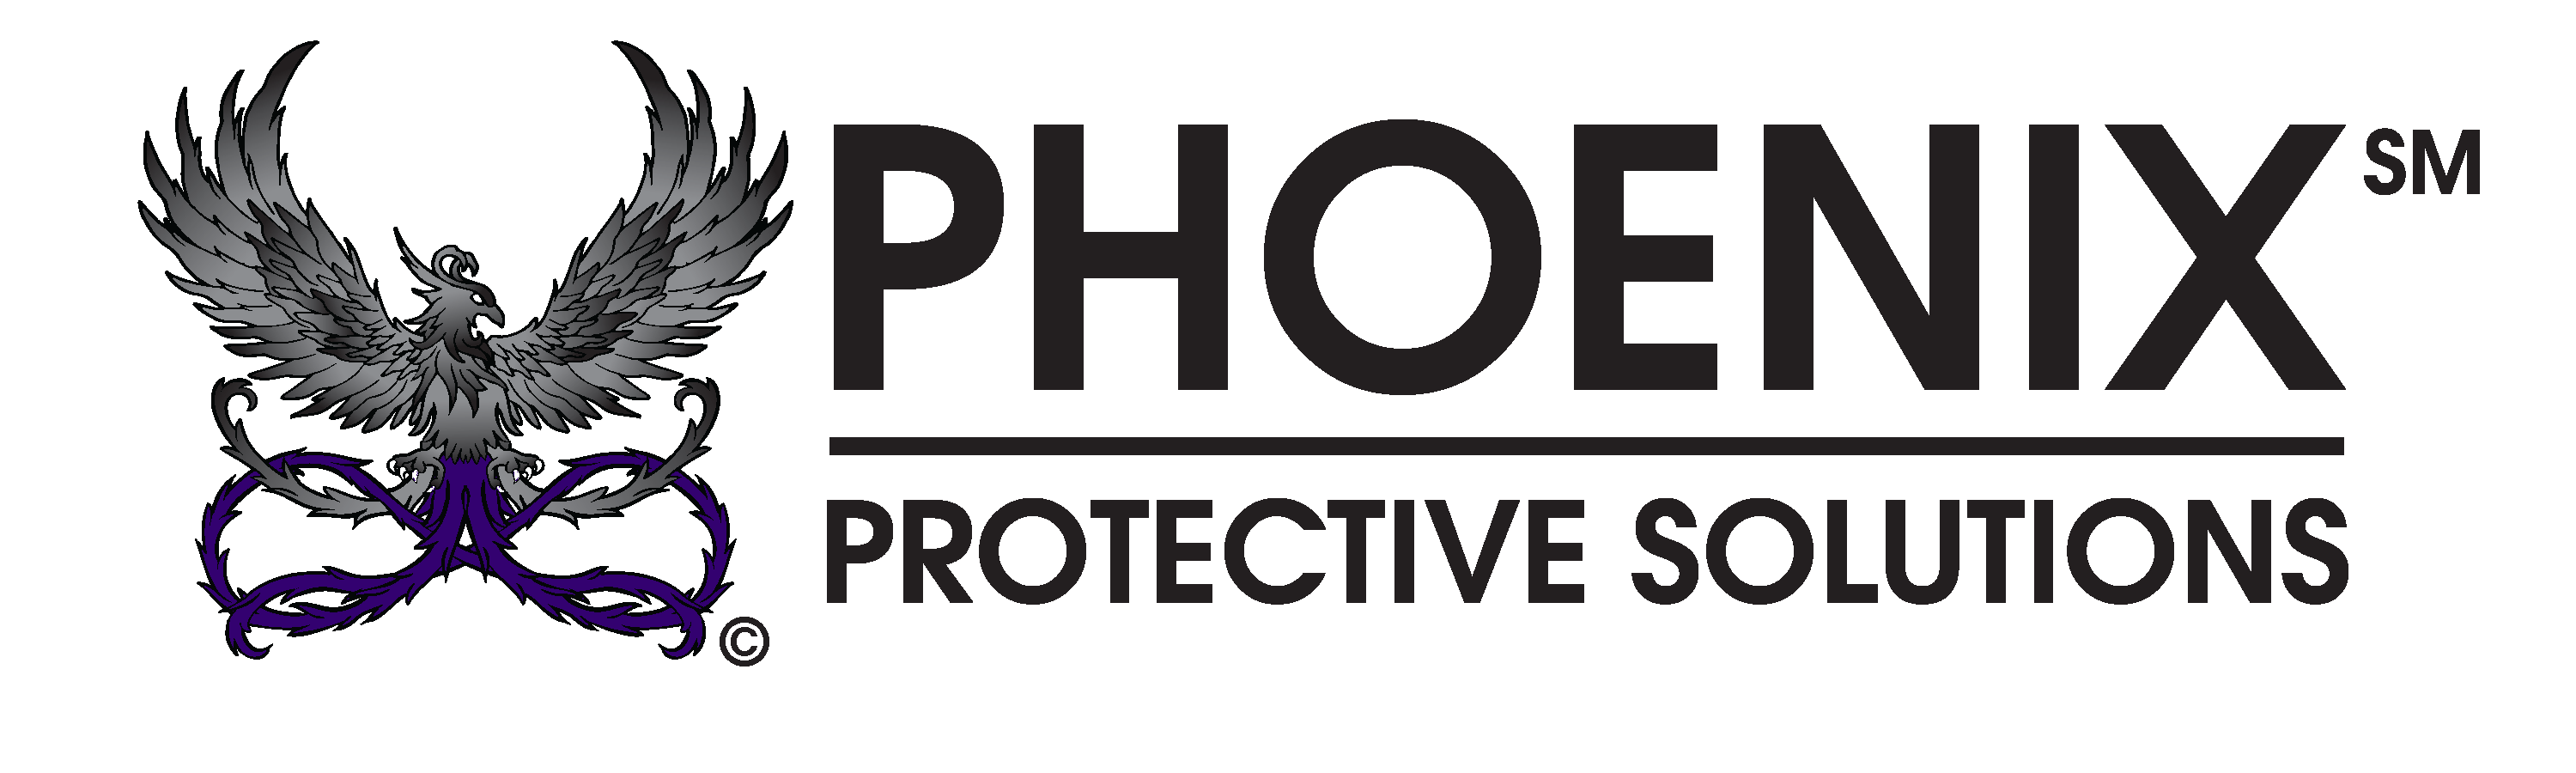 phoenix protective solutions logo